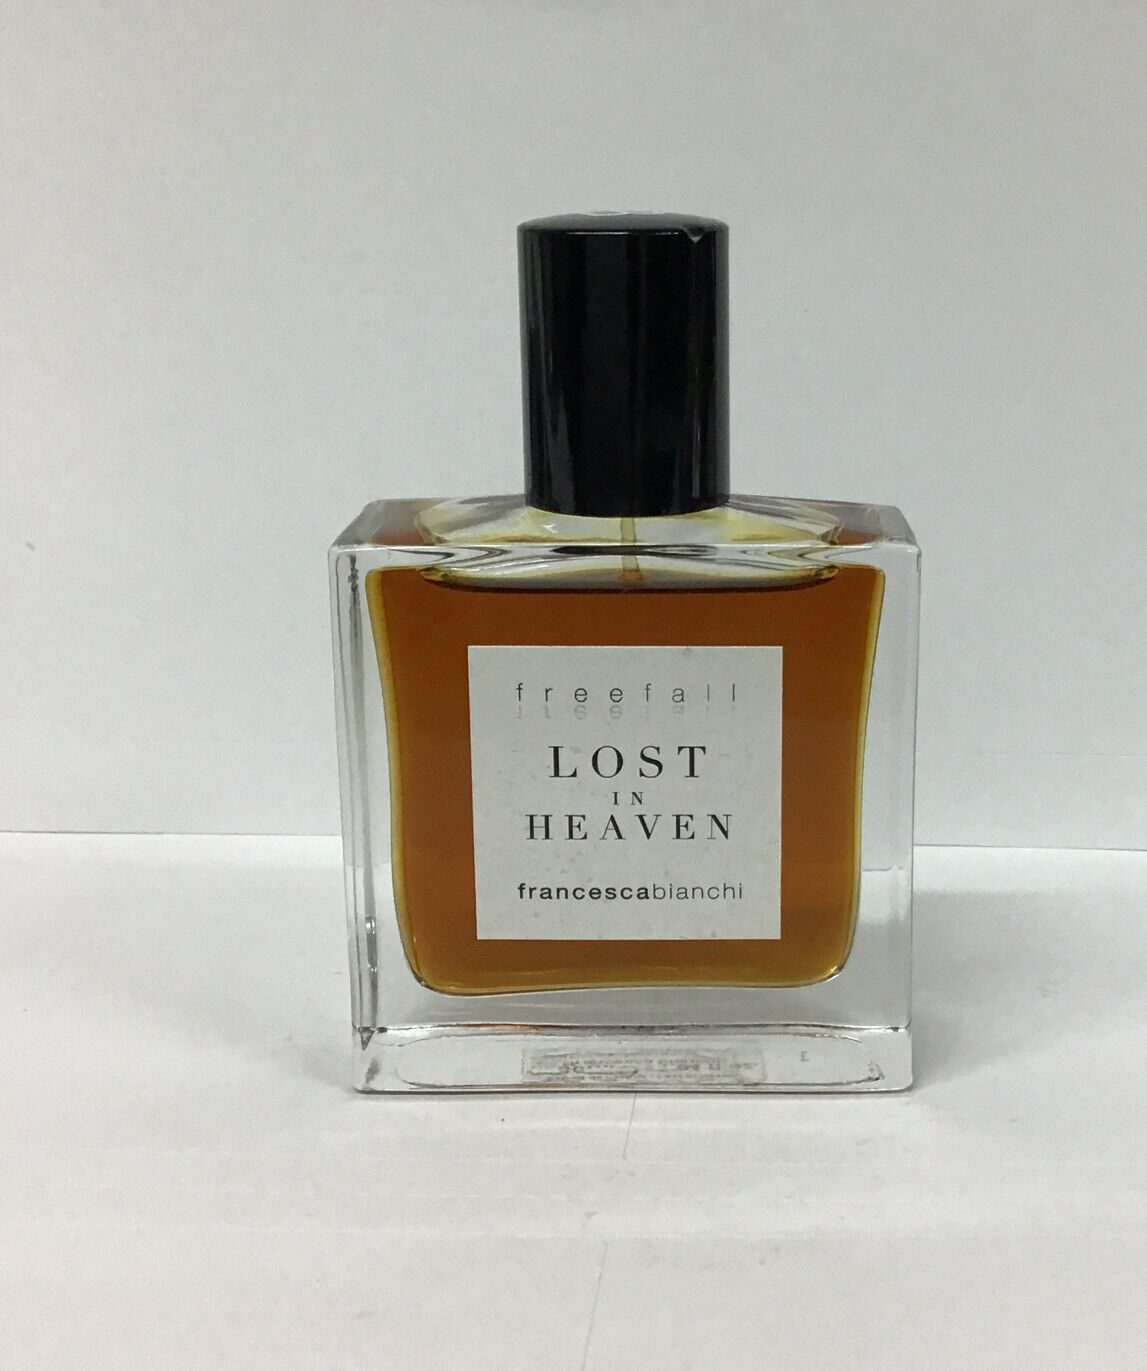 Lost In Heaven By Francesca Bianchi Extrait De Parfum Spray 1.04 Oz, As Pictured